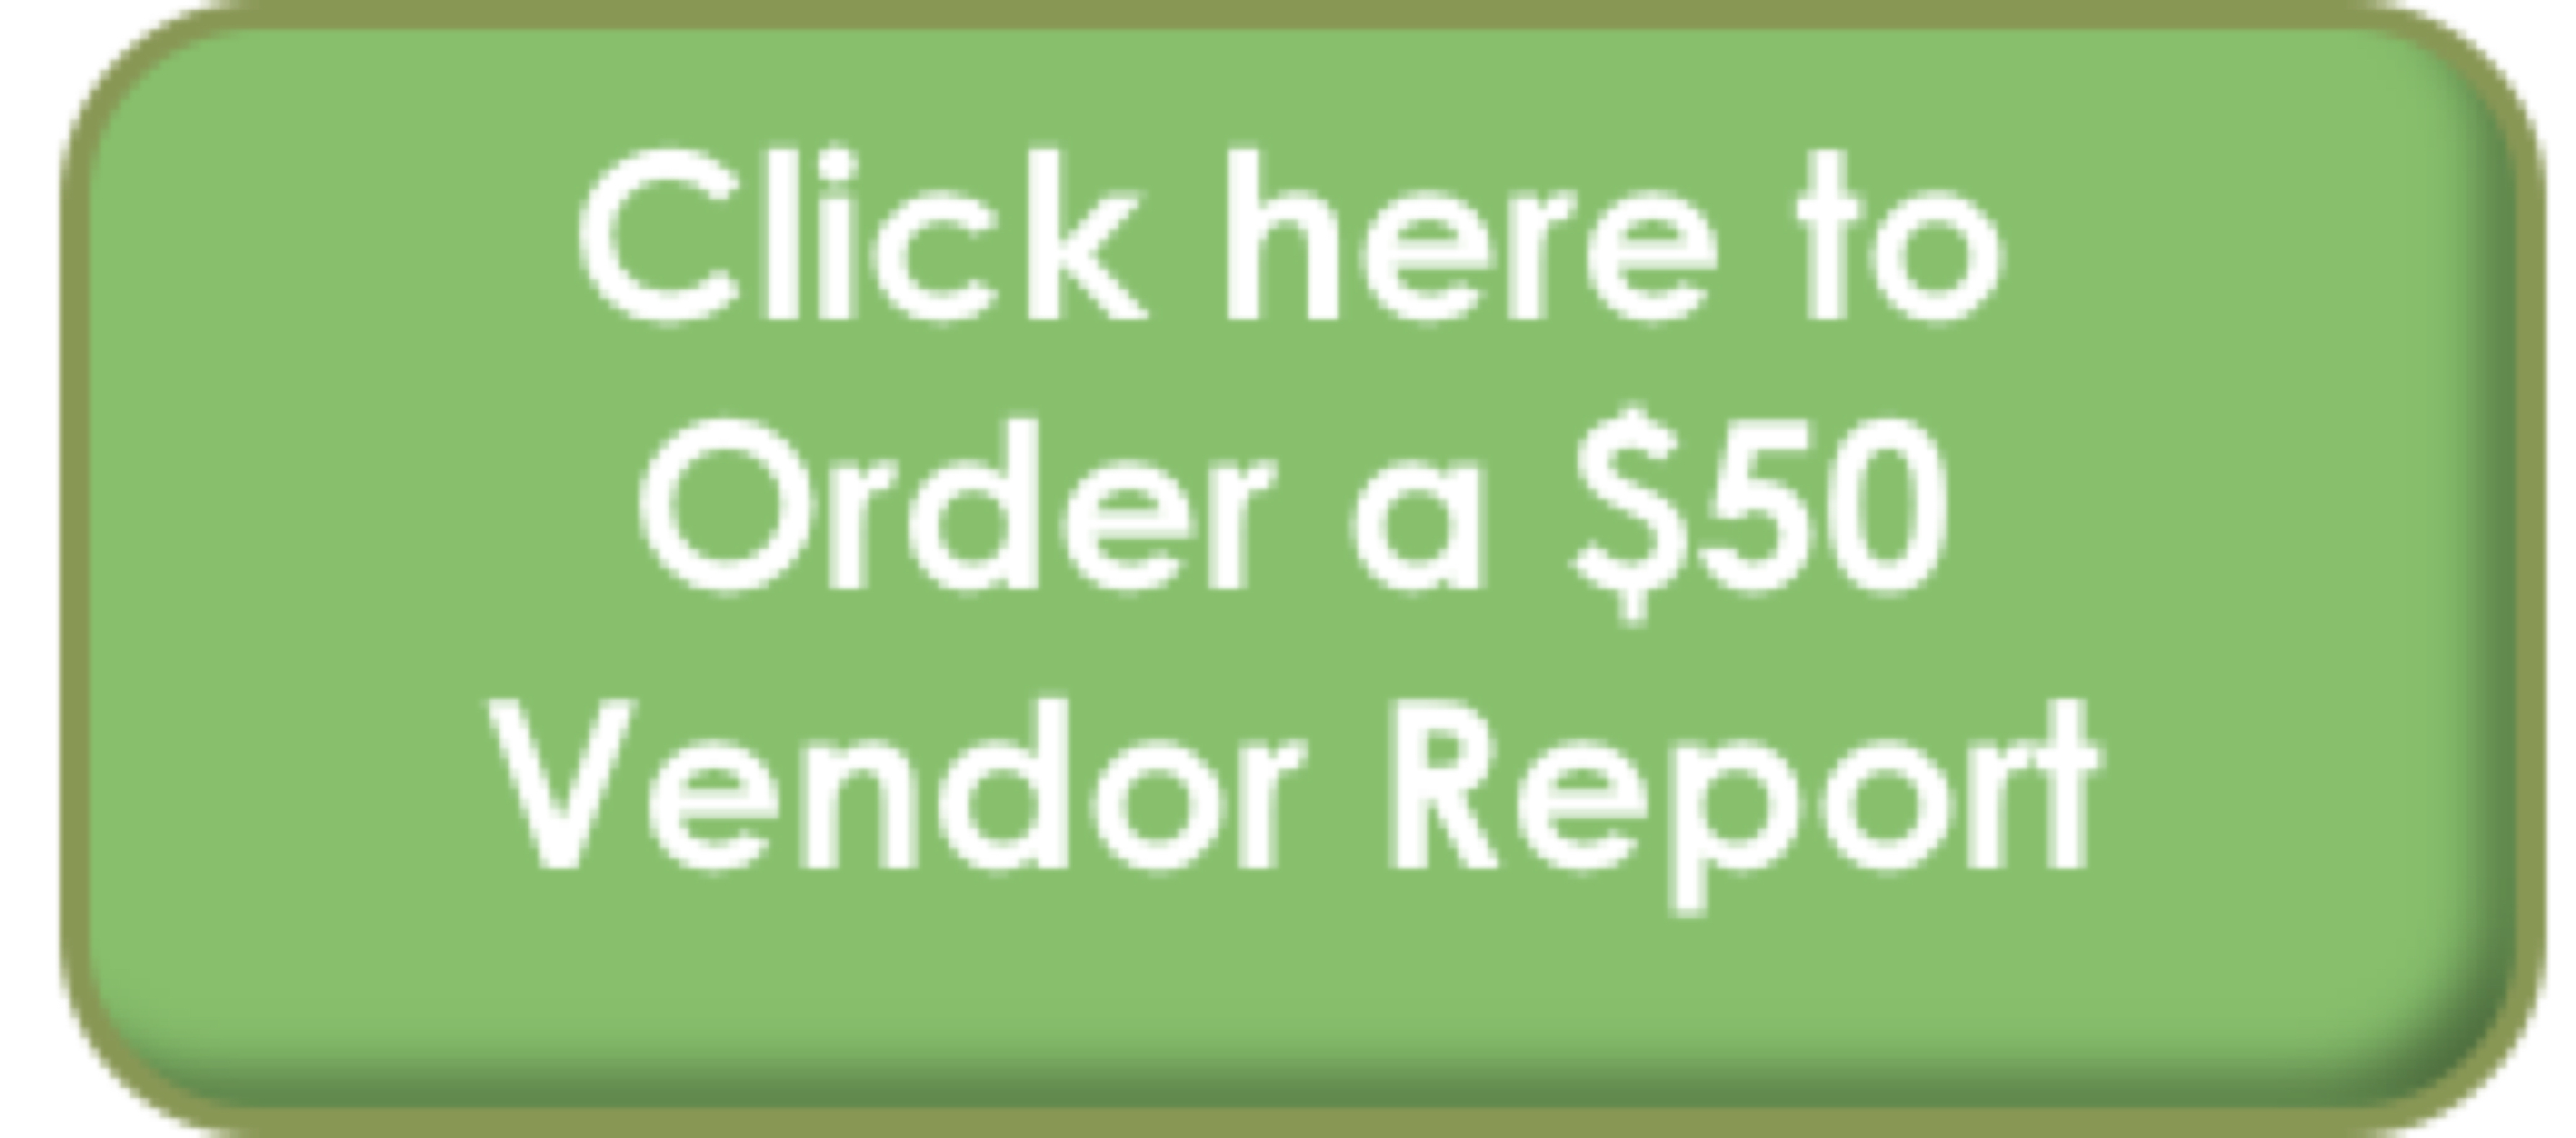 Order a $50 Vendor Report Button